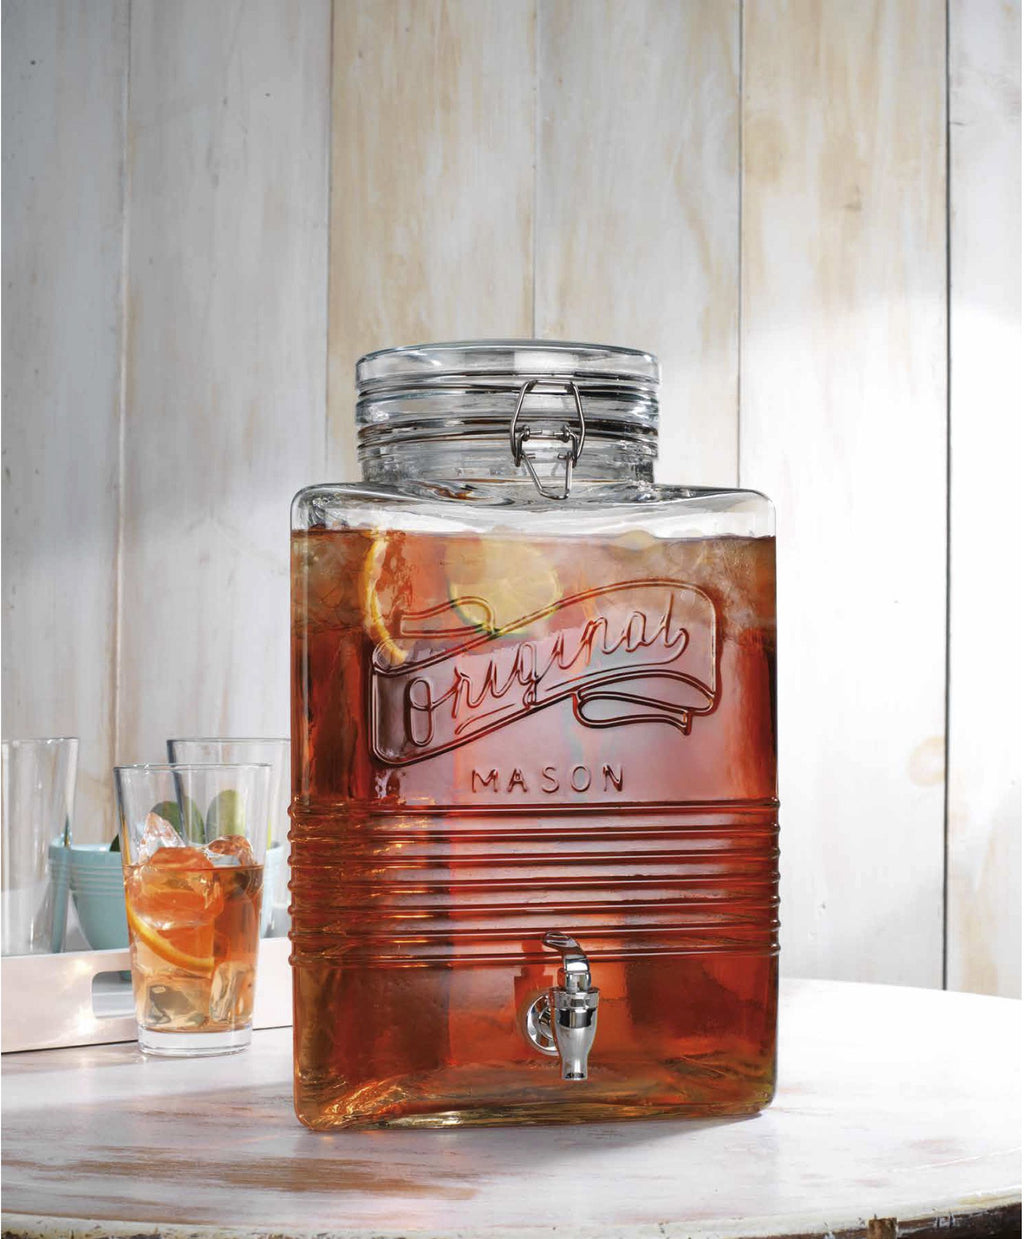 Mason Jar Beverage Dispenser - 2 Gallon, Glass